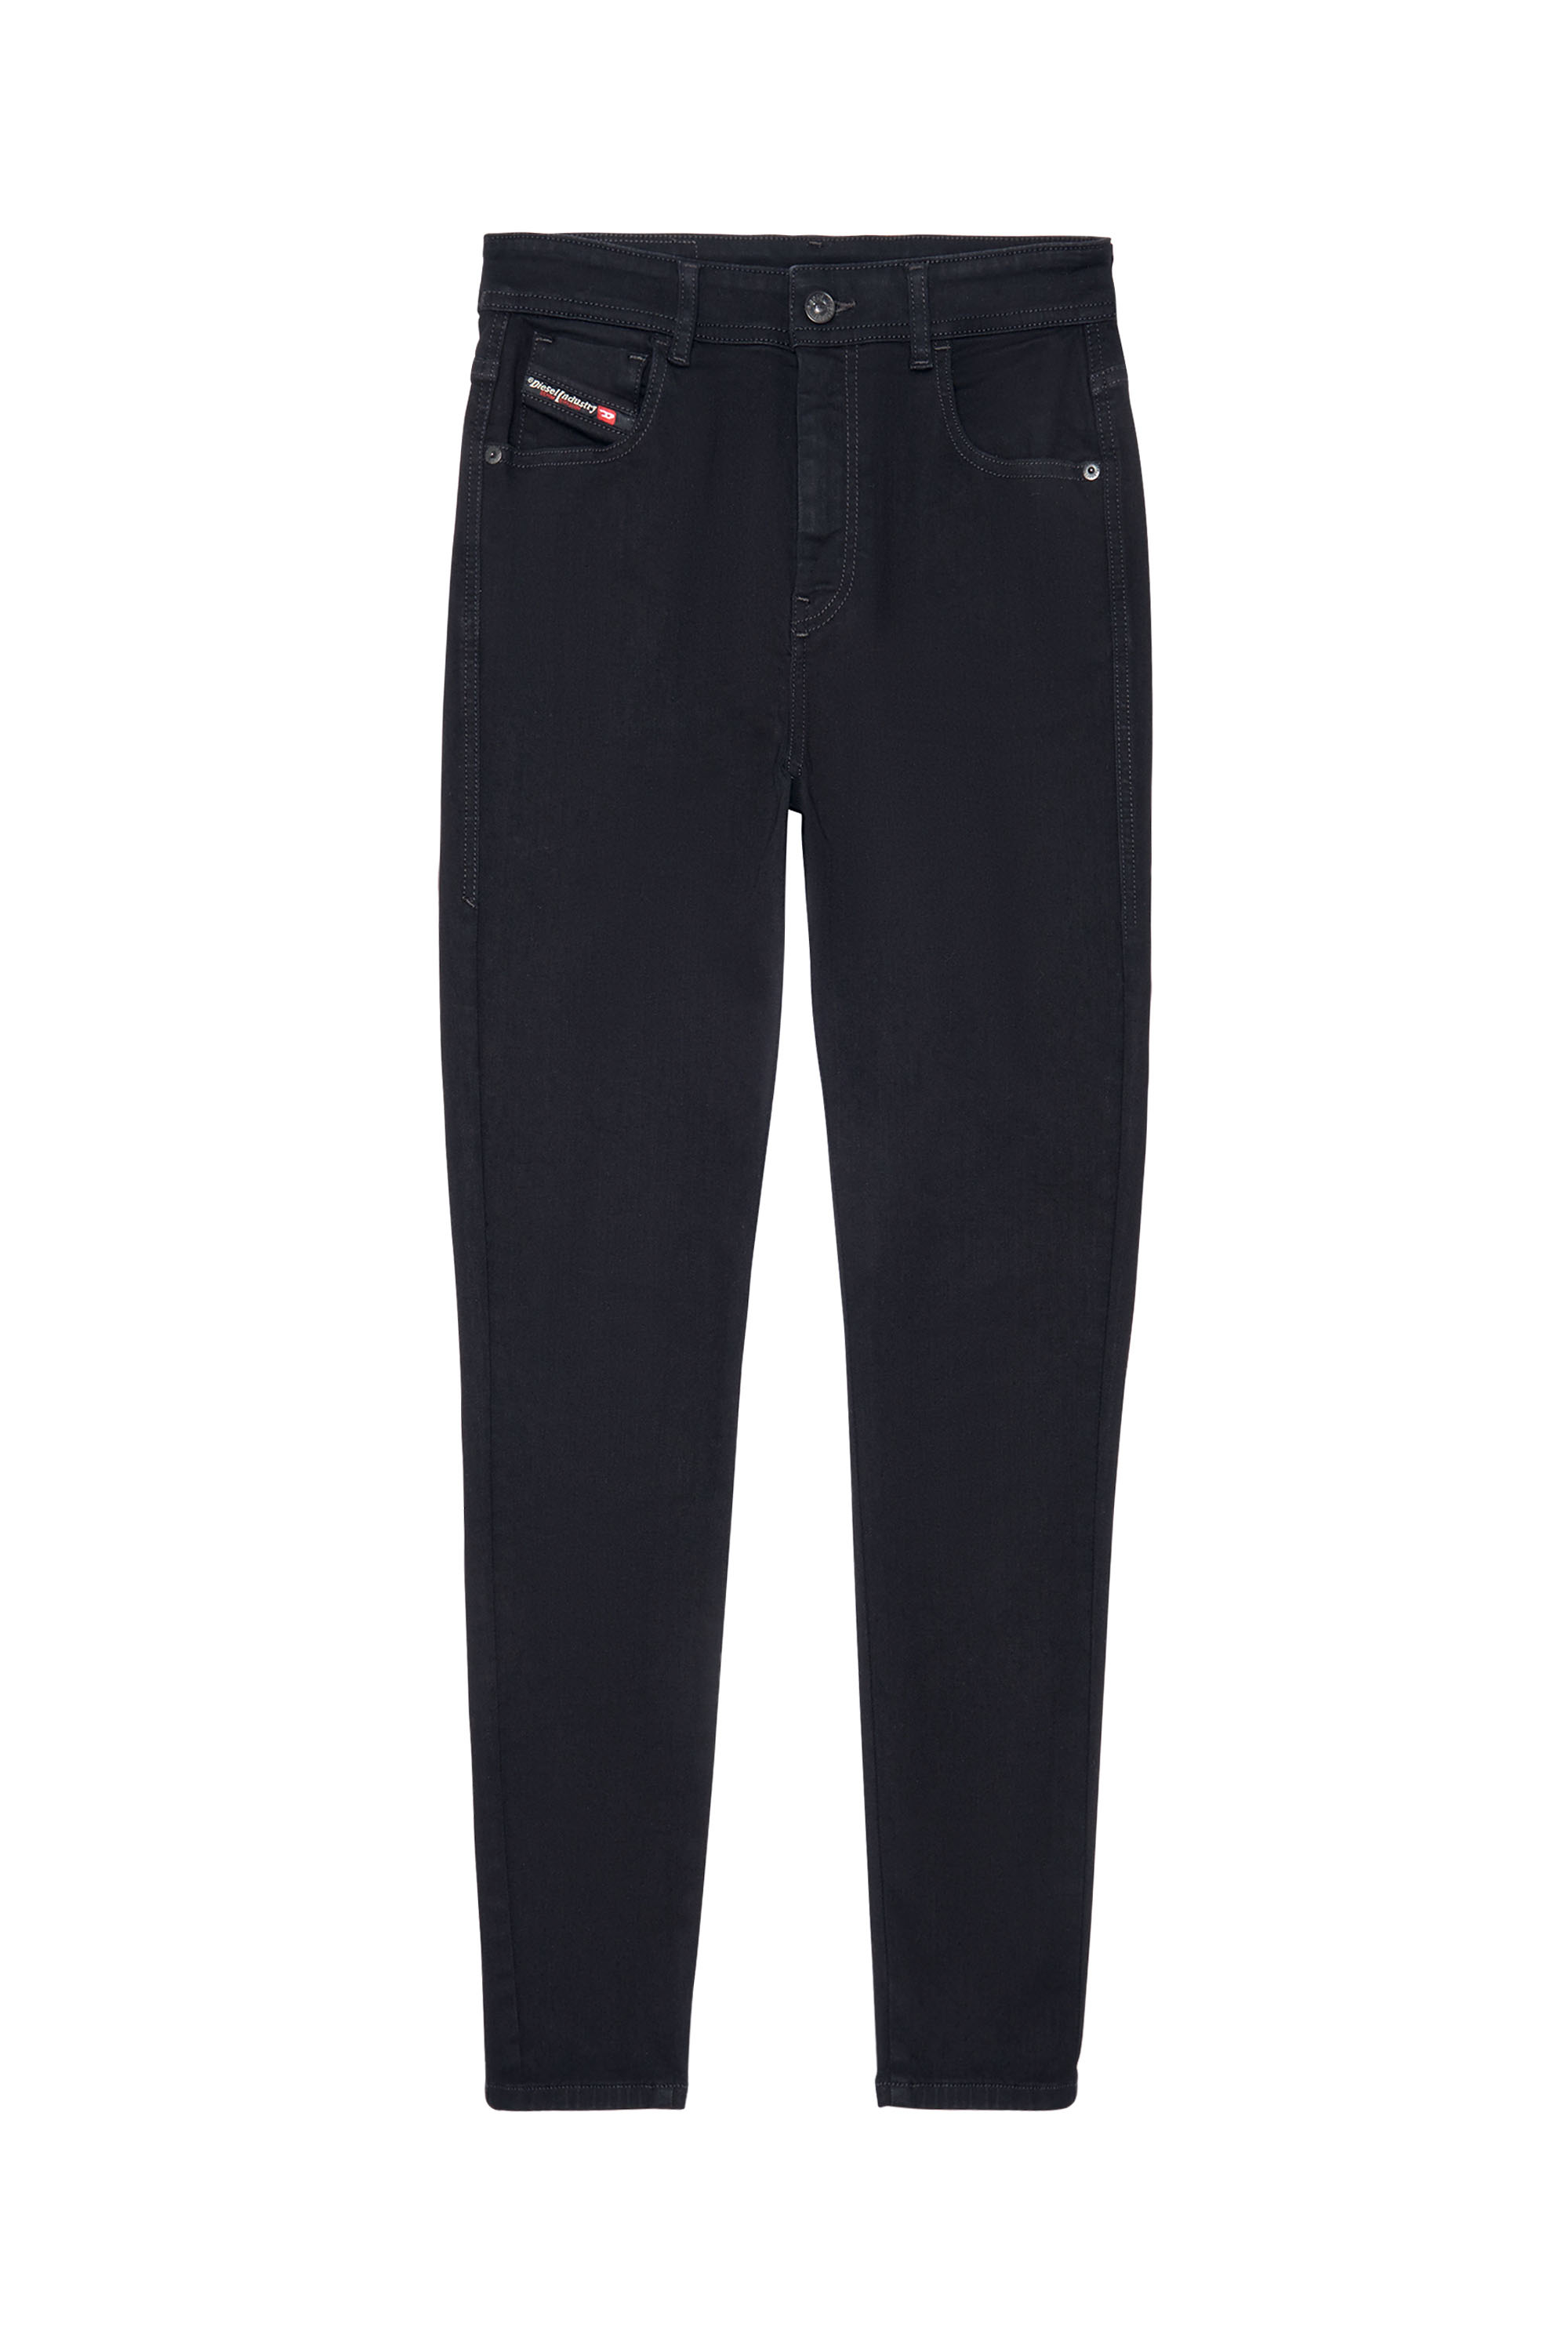 1984 Slandy high 069EF Super skinny Jeans, Black/Dark grey - Jeans